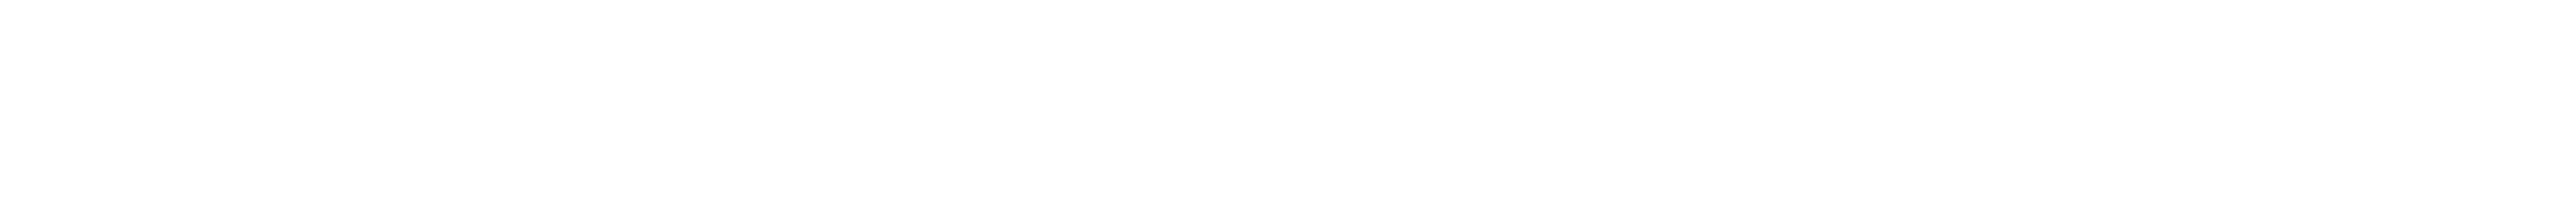 Tees Valley skyline illustration